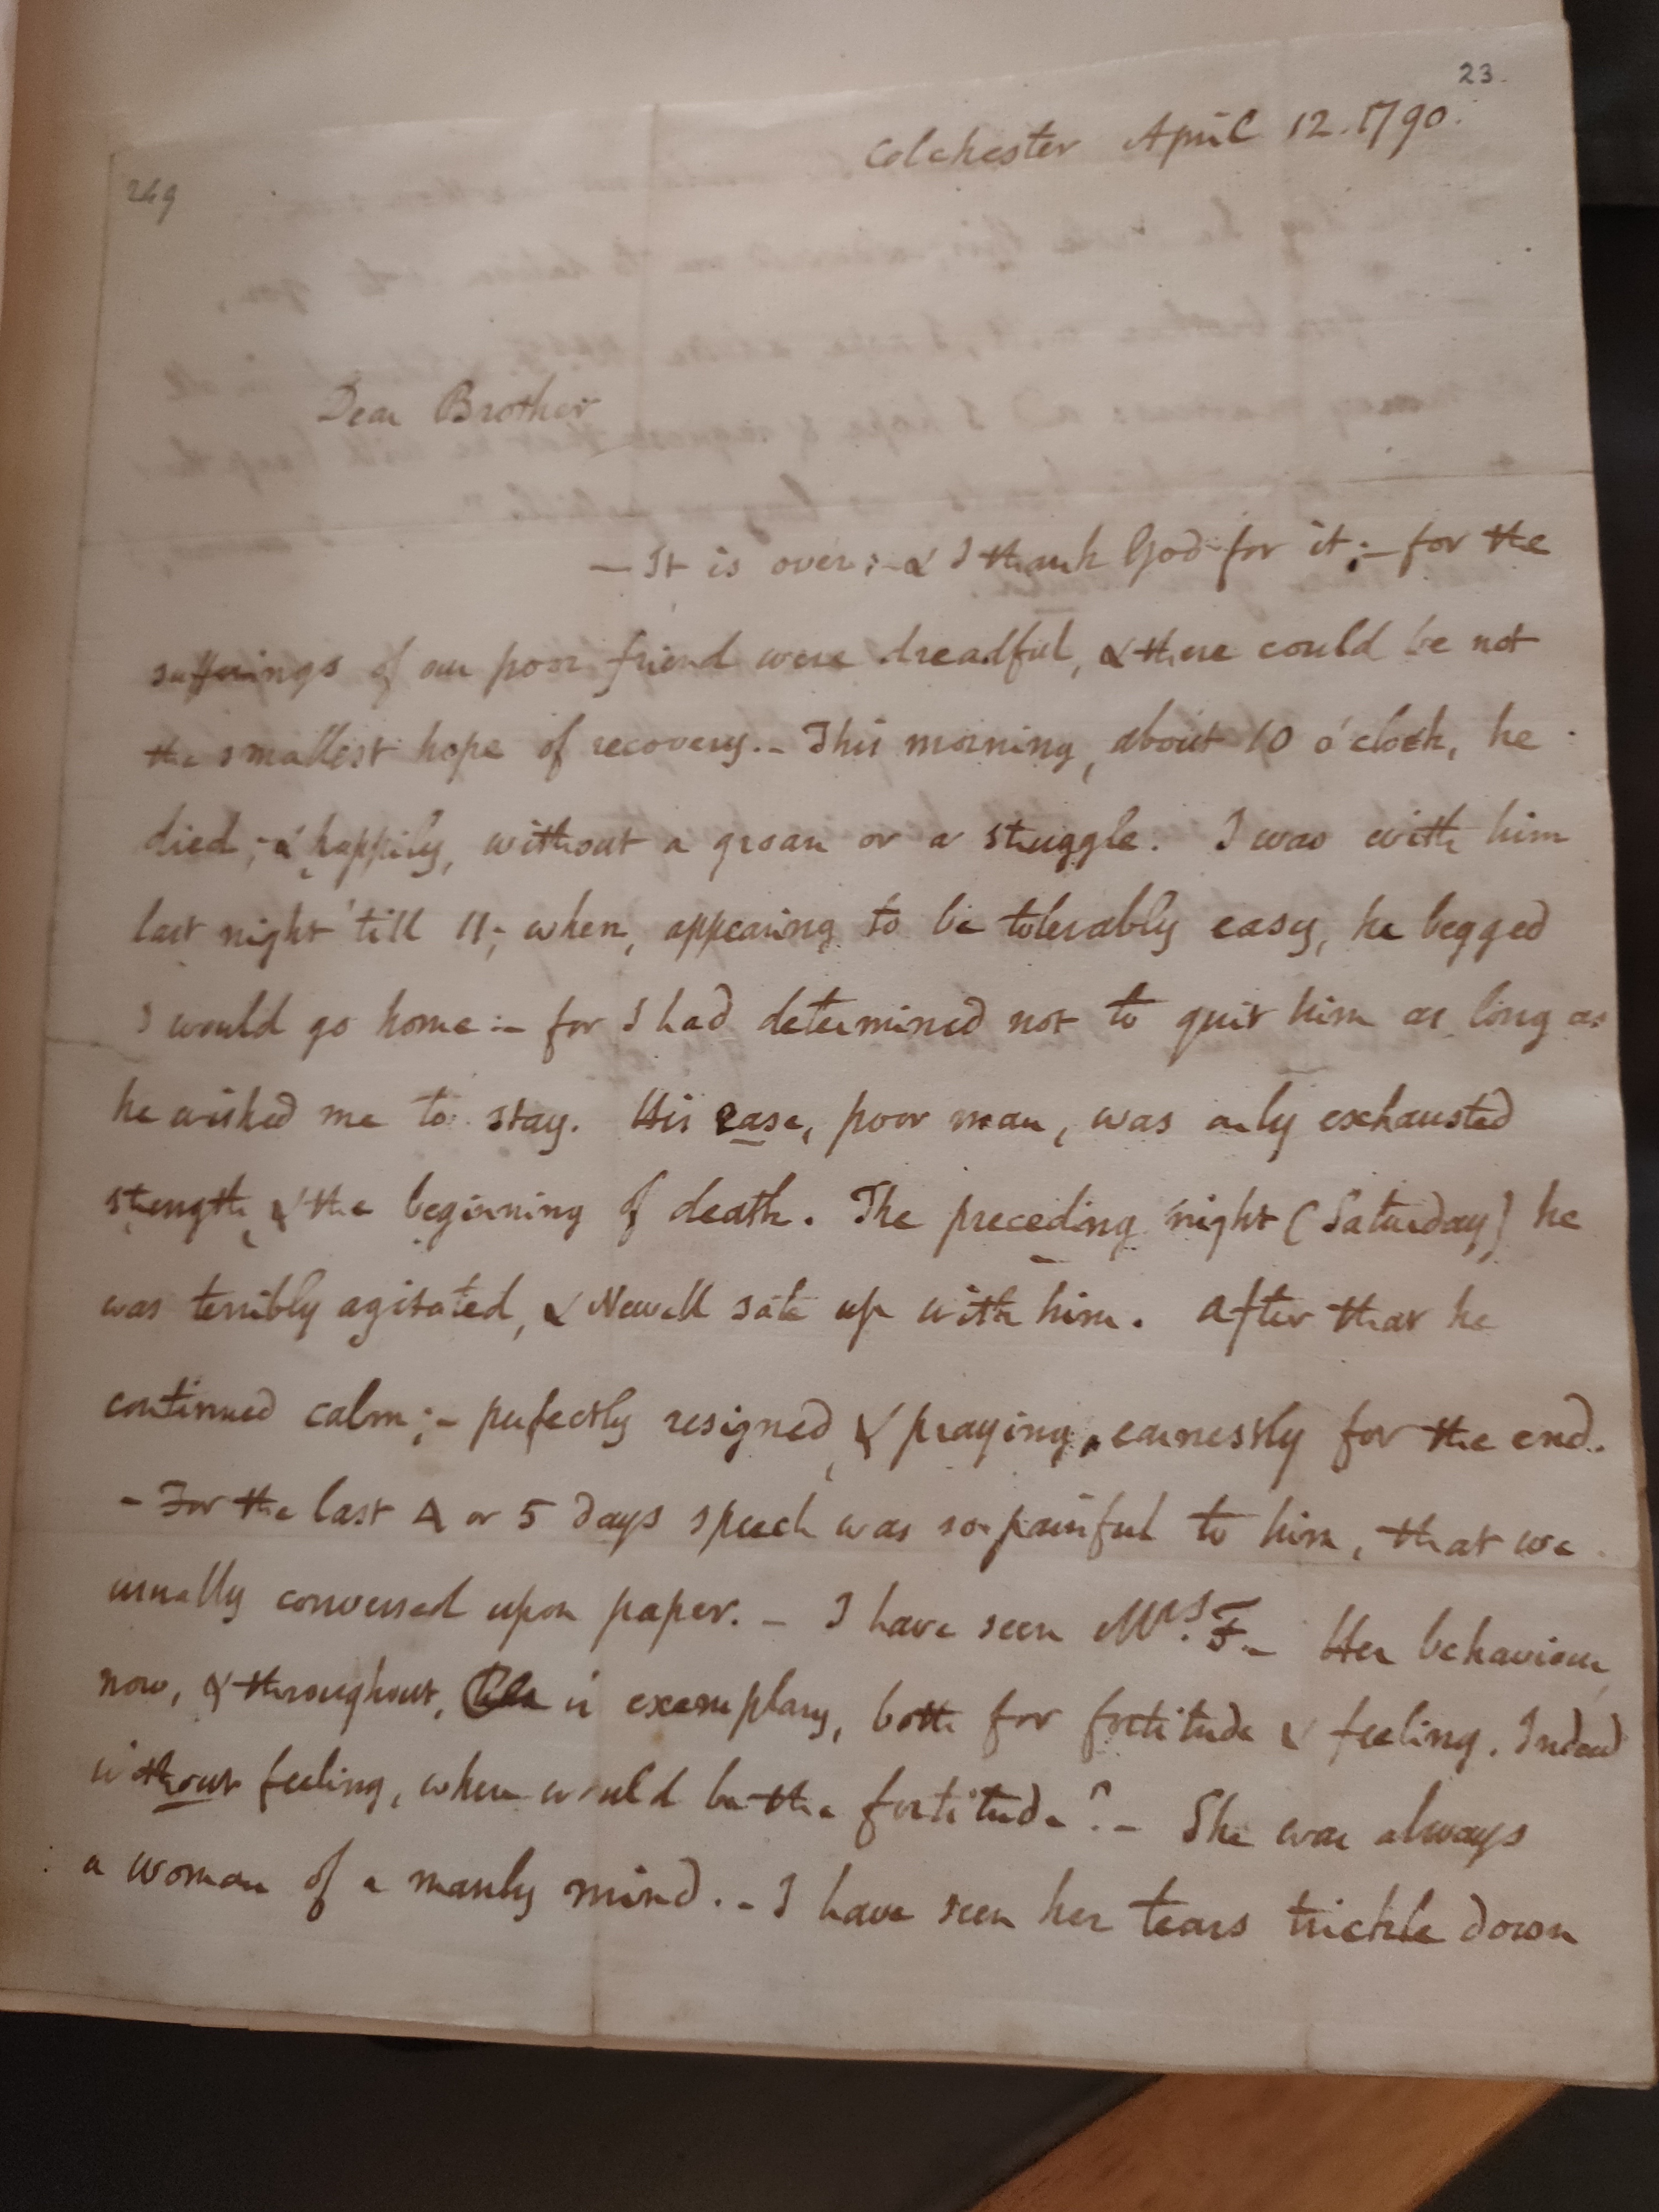 Image #1 of letter: Thomas Twining to Daniel Twining, 12 April 1790